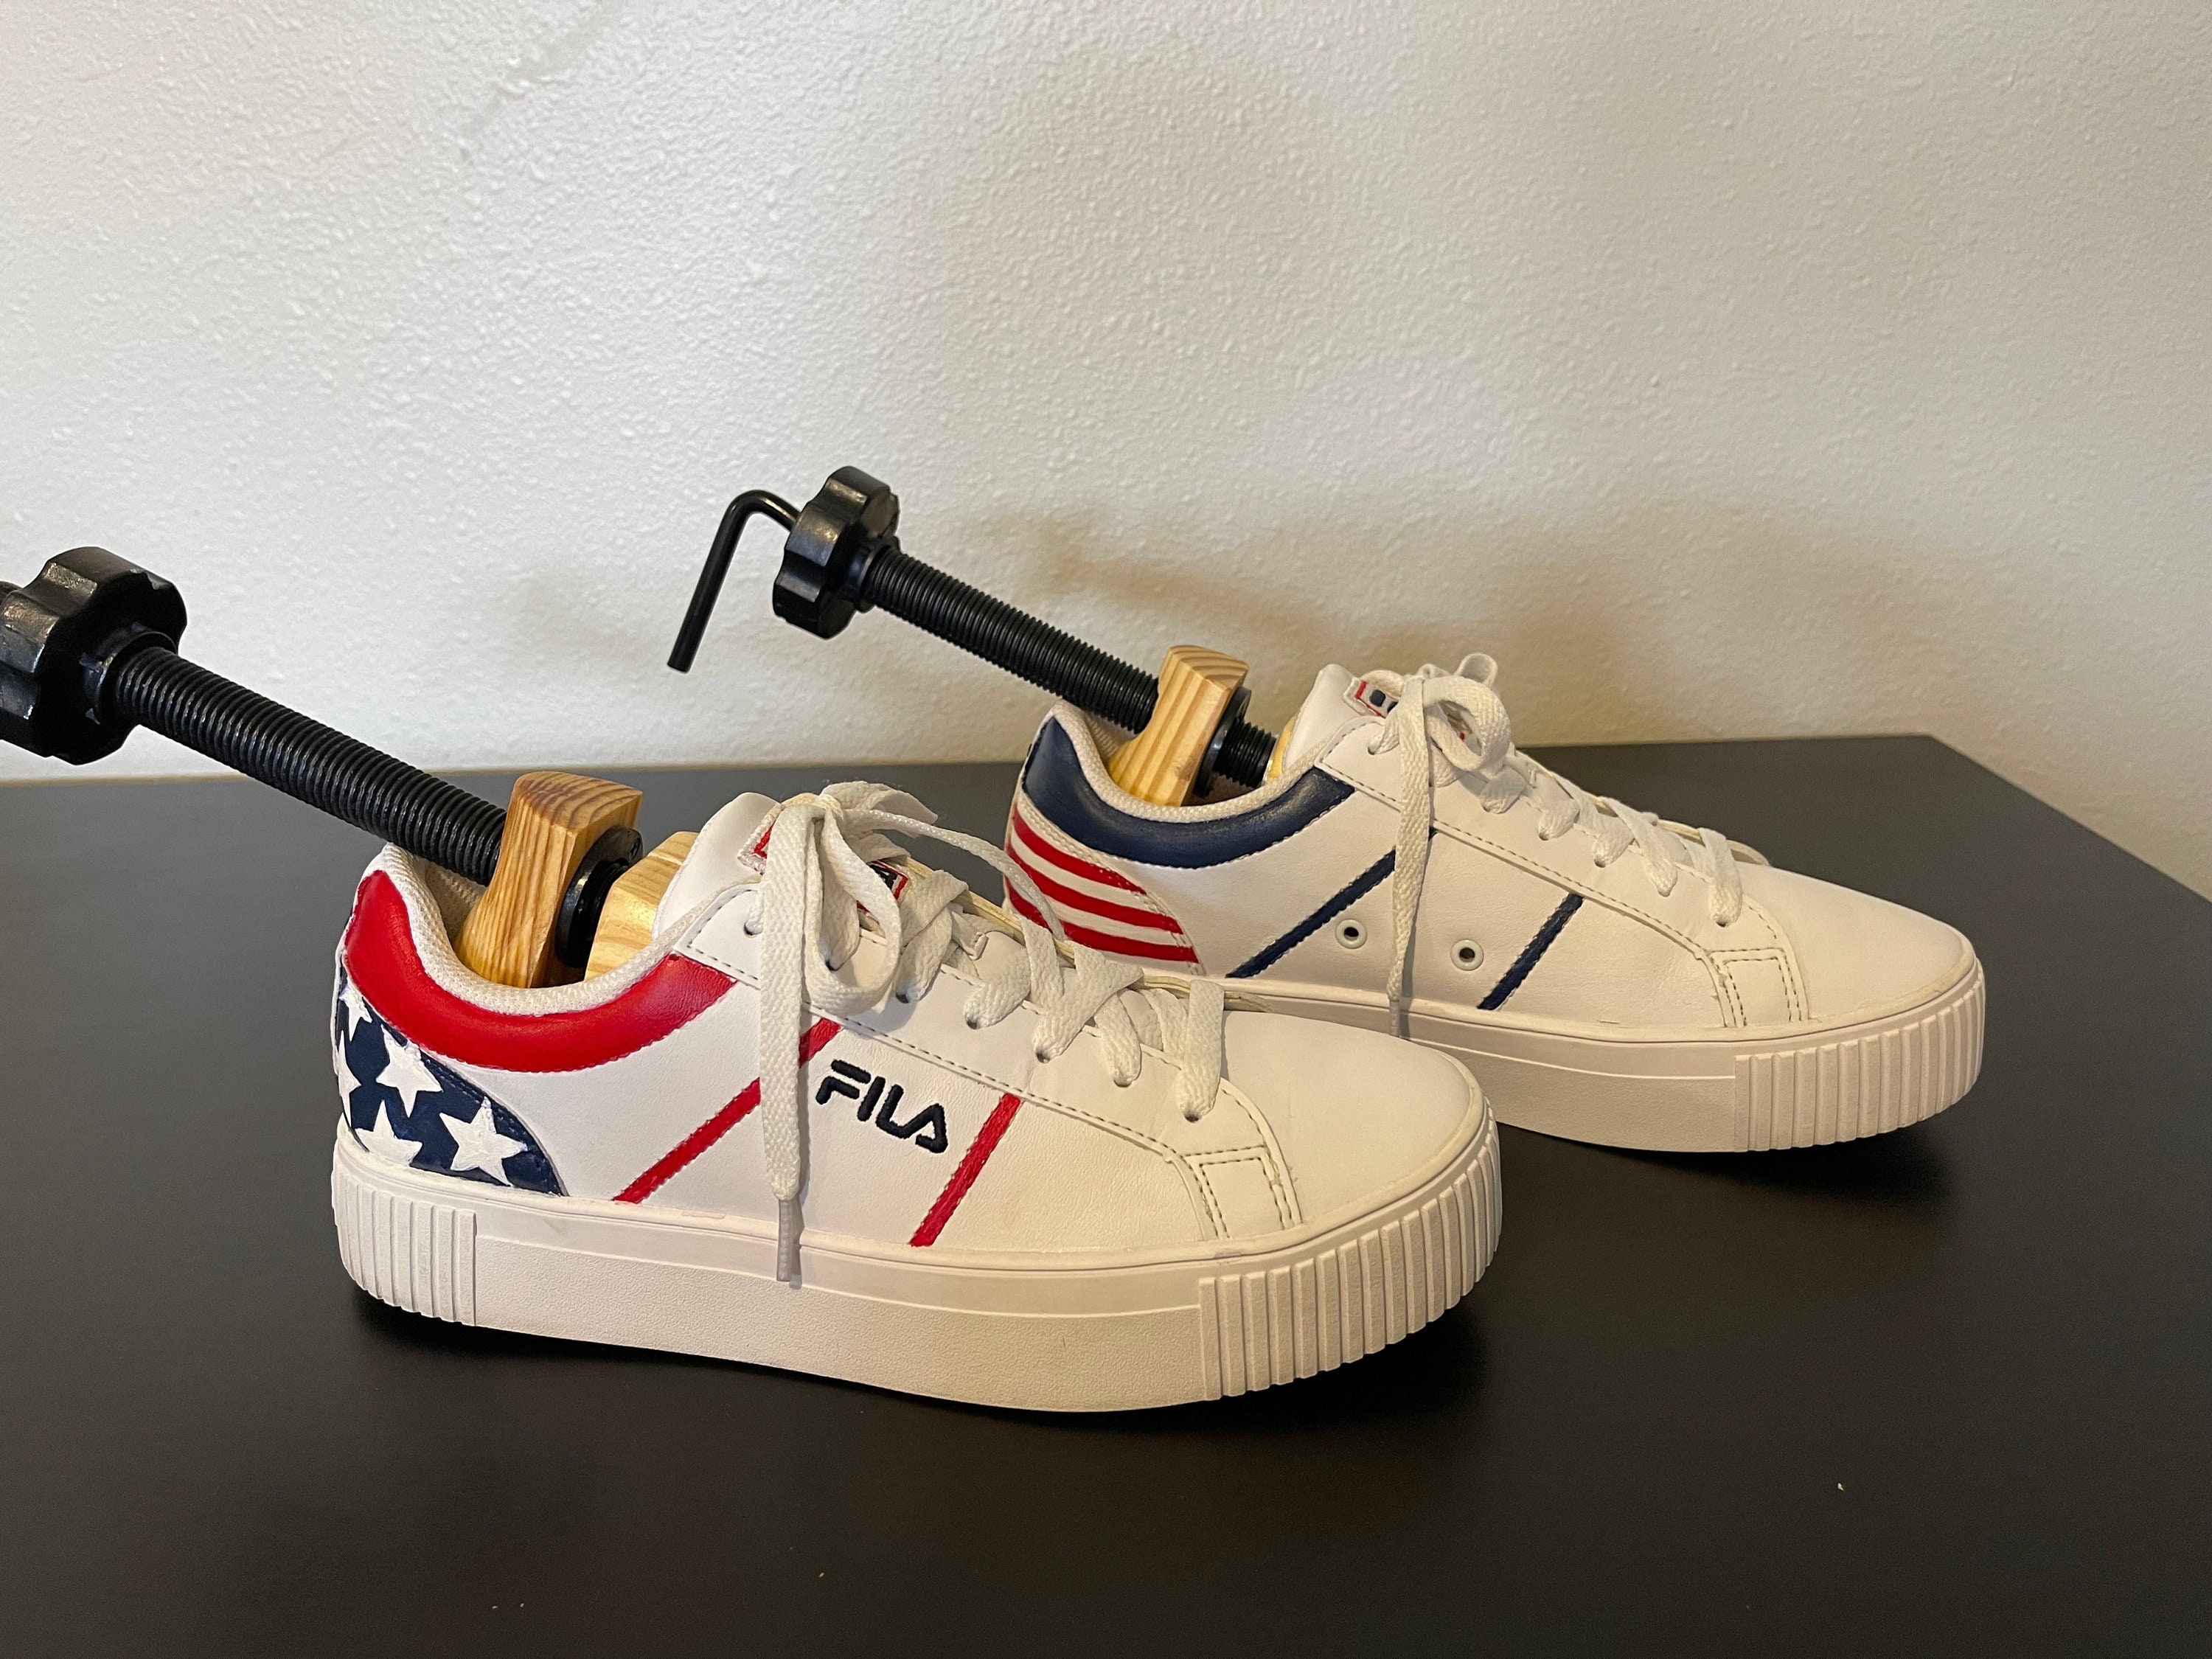 Custom Fila Shoes - Make Own Fila Shoes